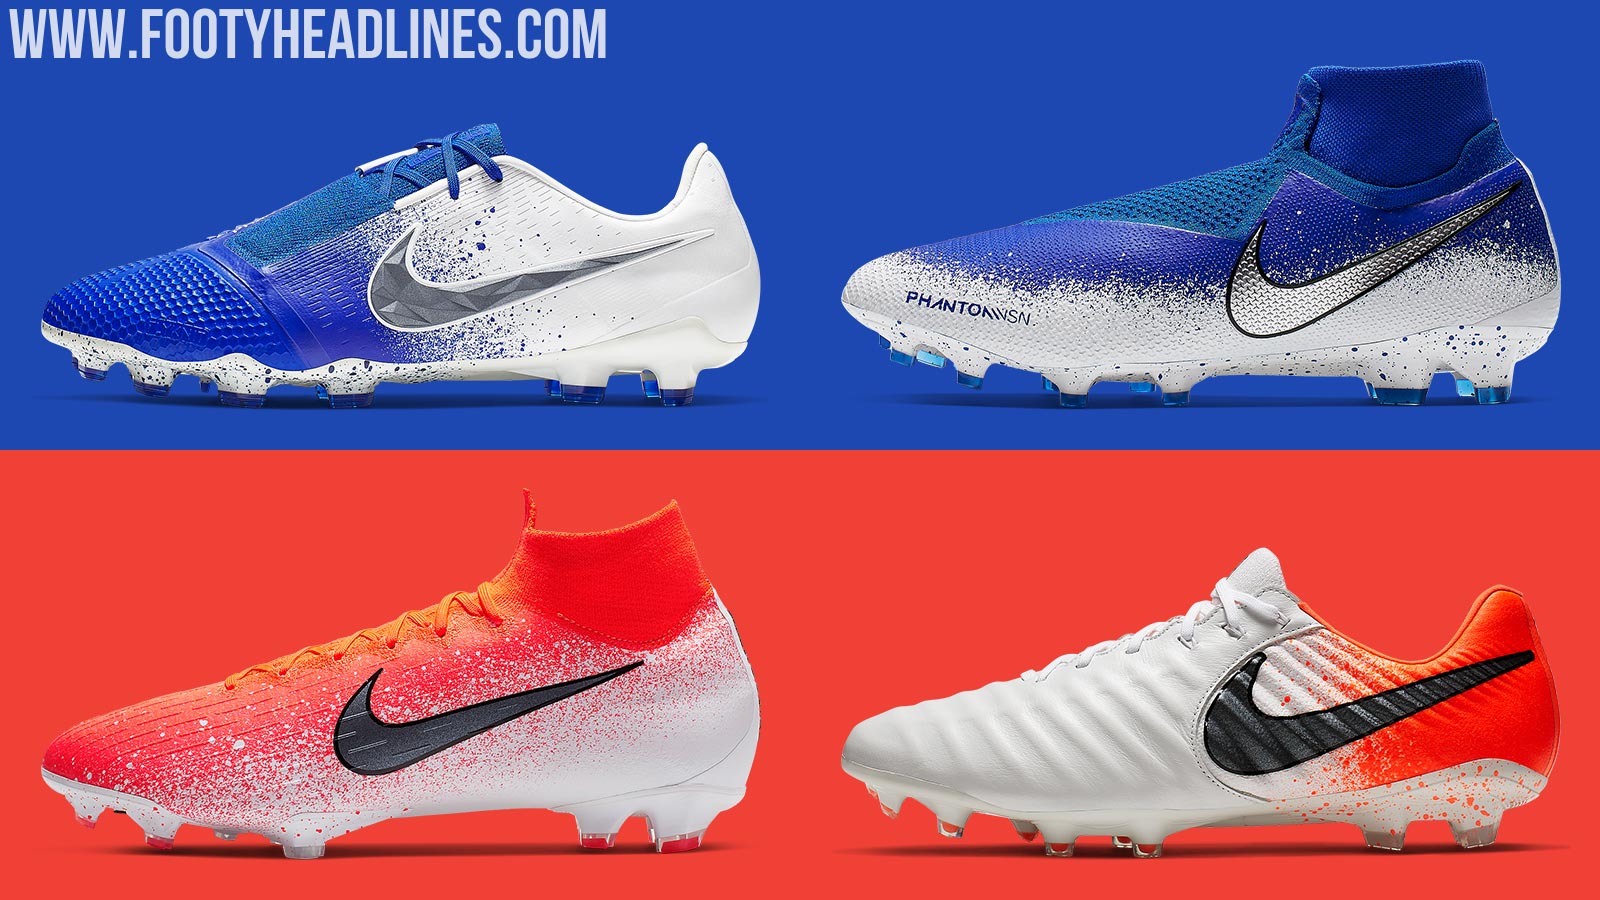 Nike 2019 Boots Pack Released - Footy Headlines